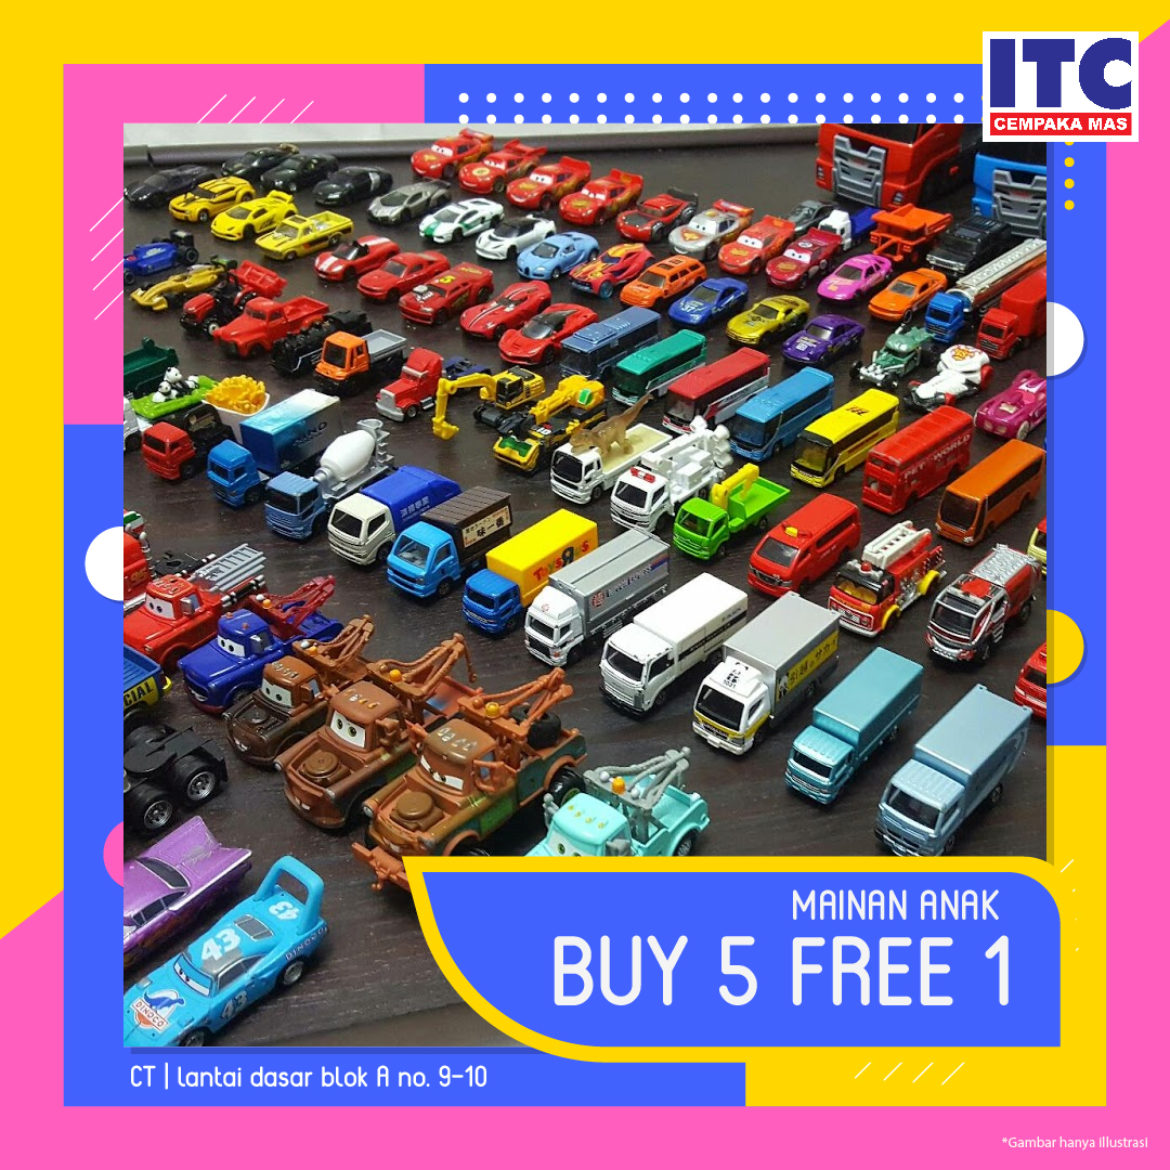 Mainan Anak  Buy 5 Get 1 FREE di  ITC  Cempaka  Mas  ITC  